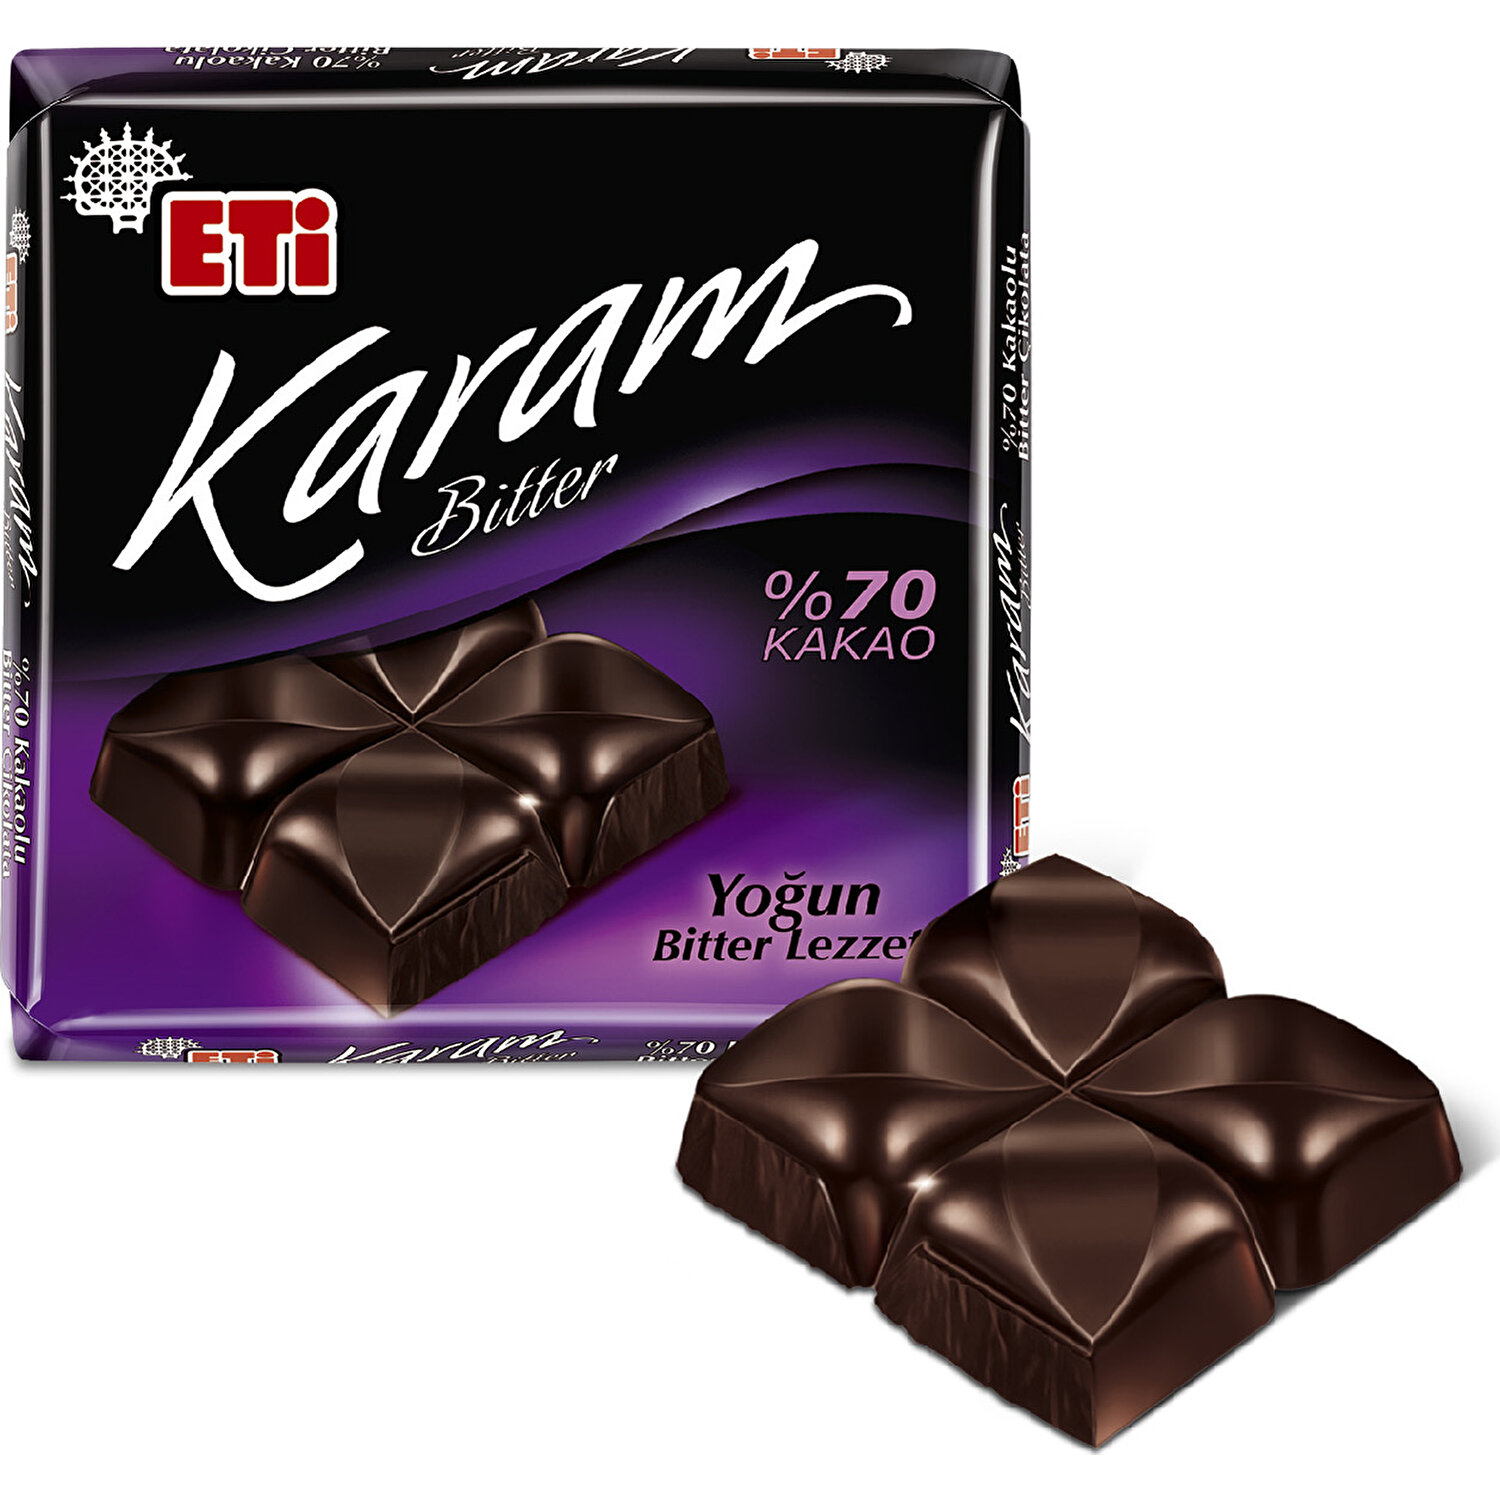 Eti Karam 70 Kakaolu Bitter Çikolata 60 g x 6 Adet Fiyatı